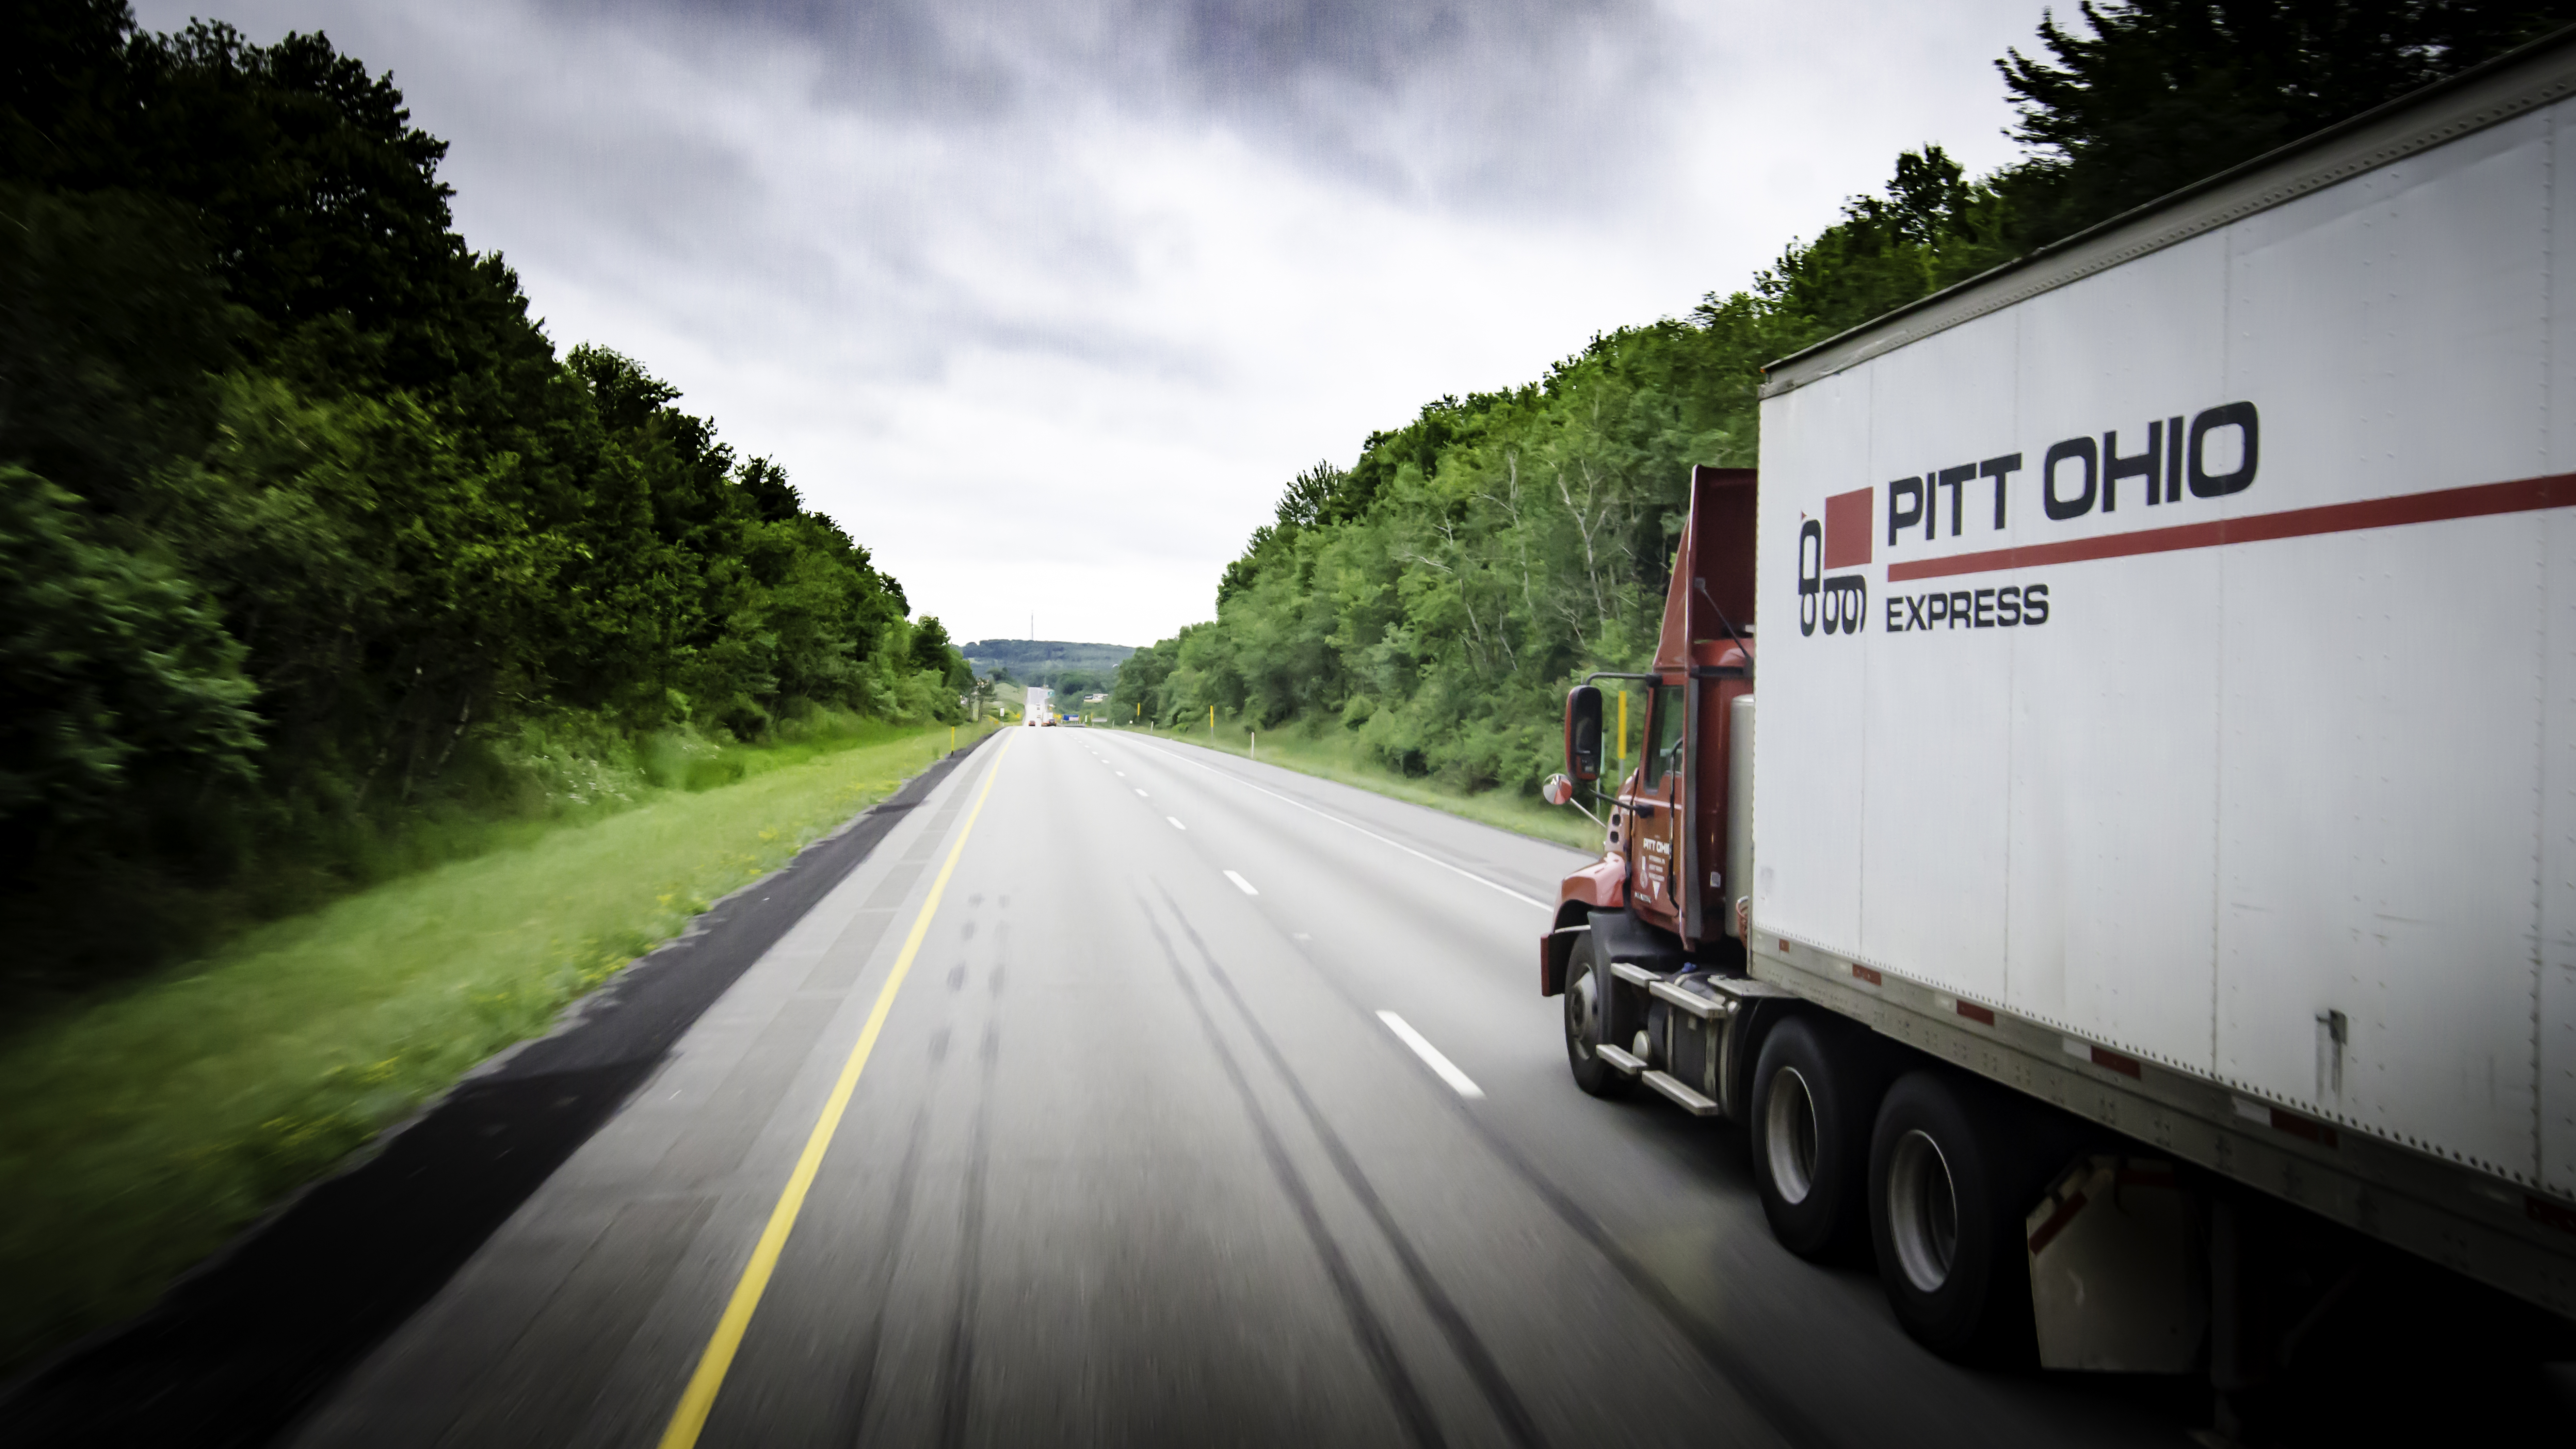 https://www.freightwaves.com/wp-content/uploads/2023/02/22/Pitt-Ohio-truck-credit-JAFW.jpg